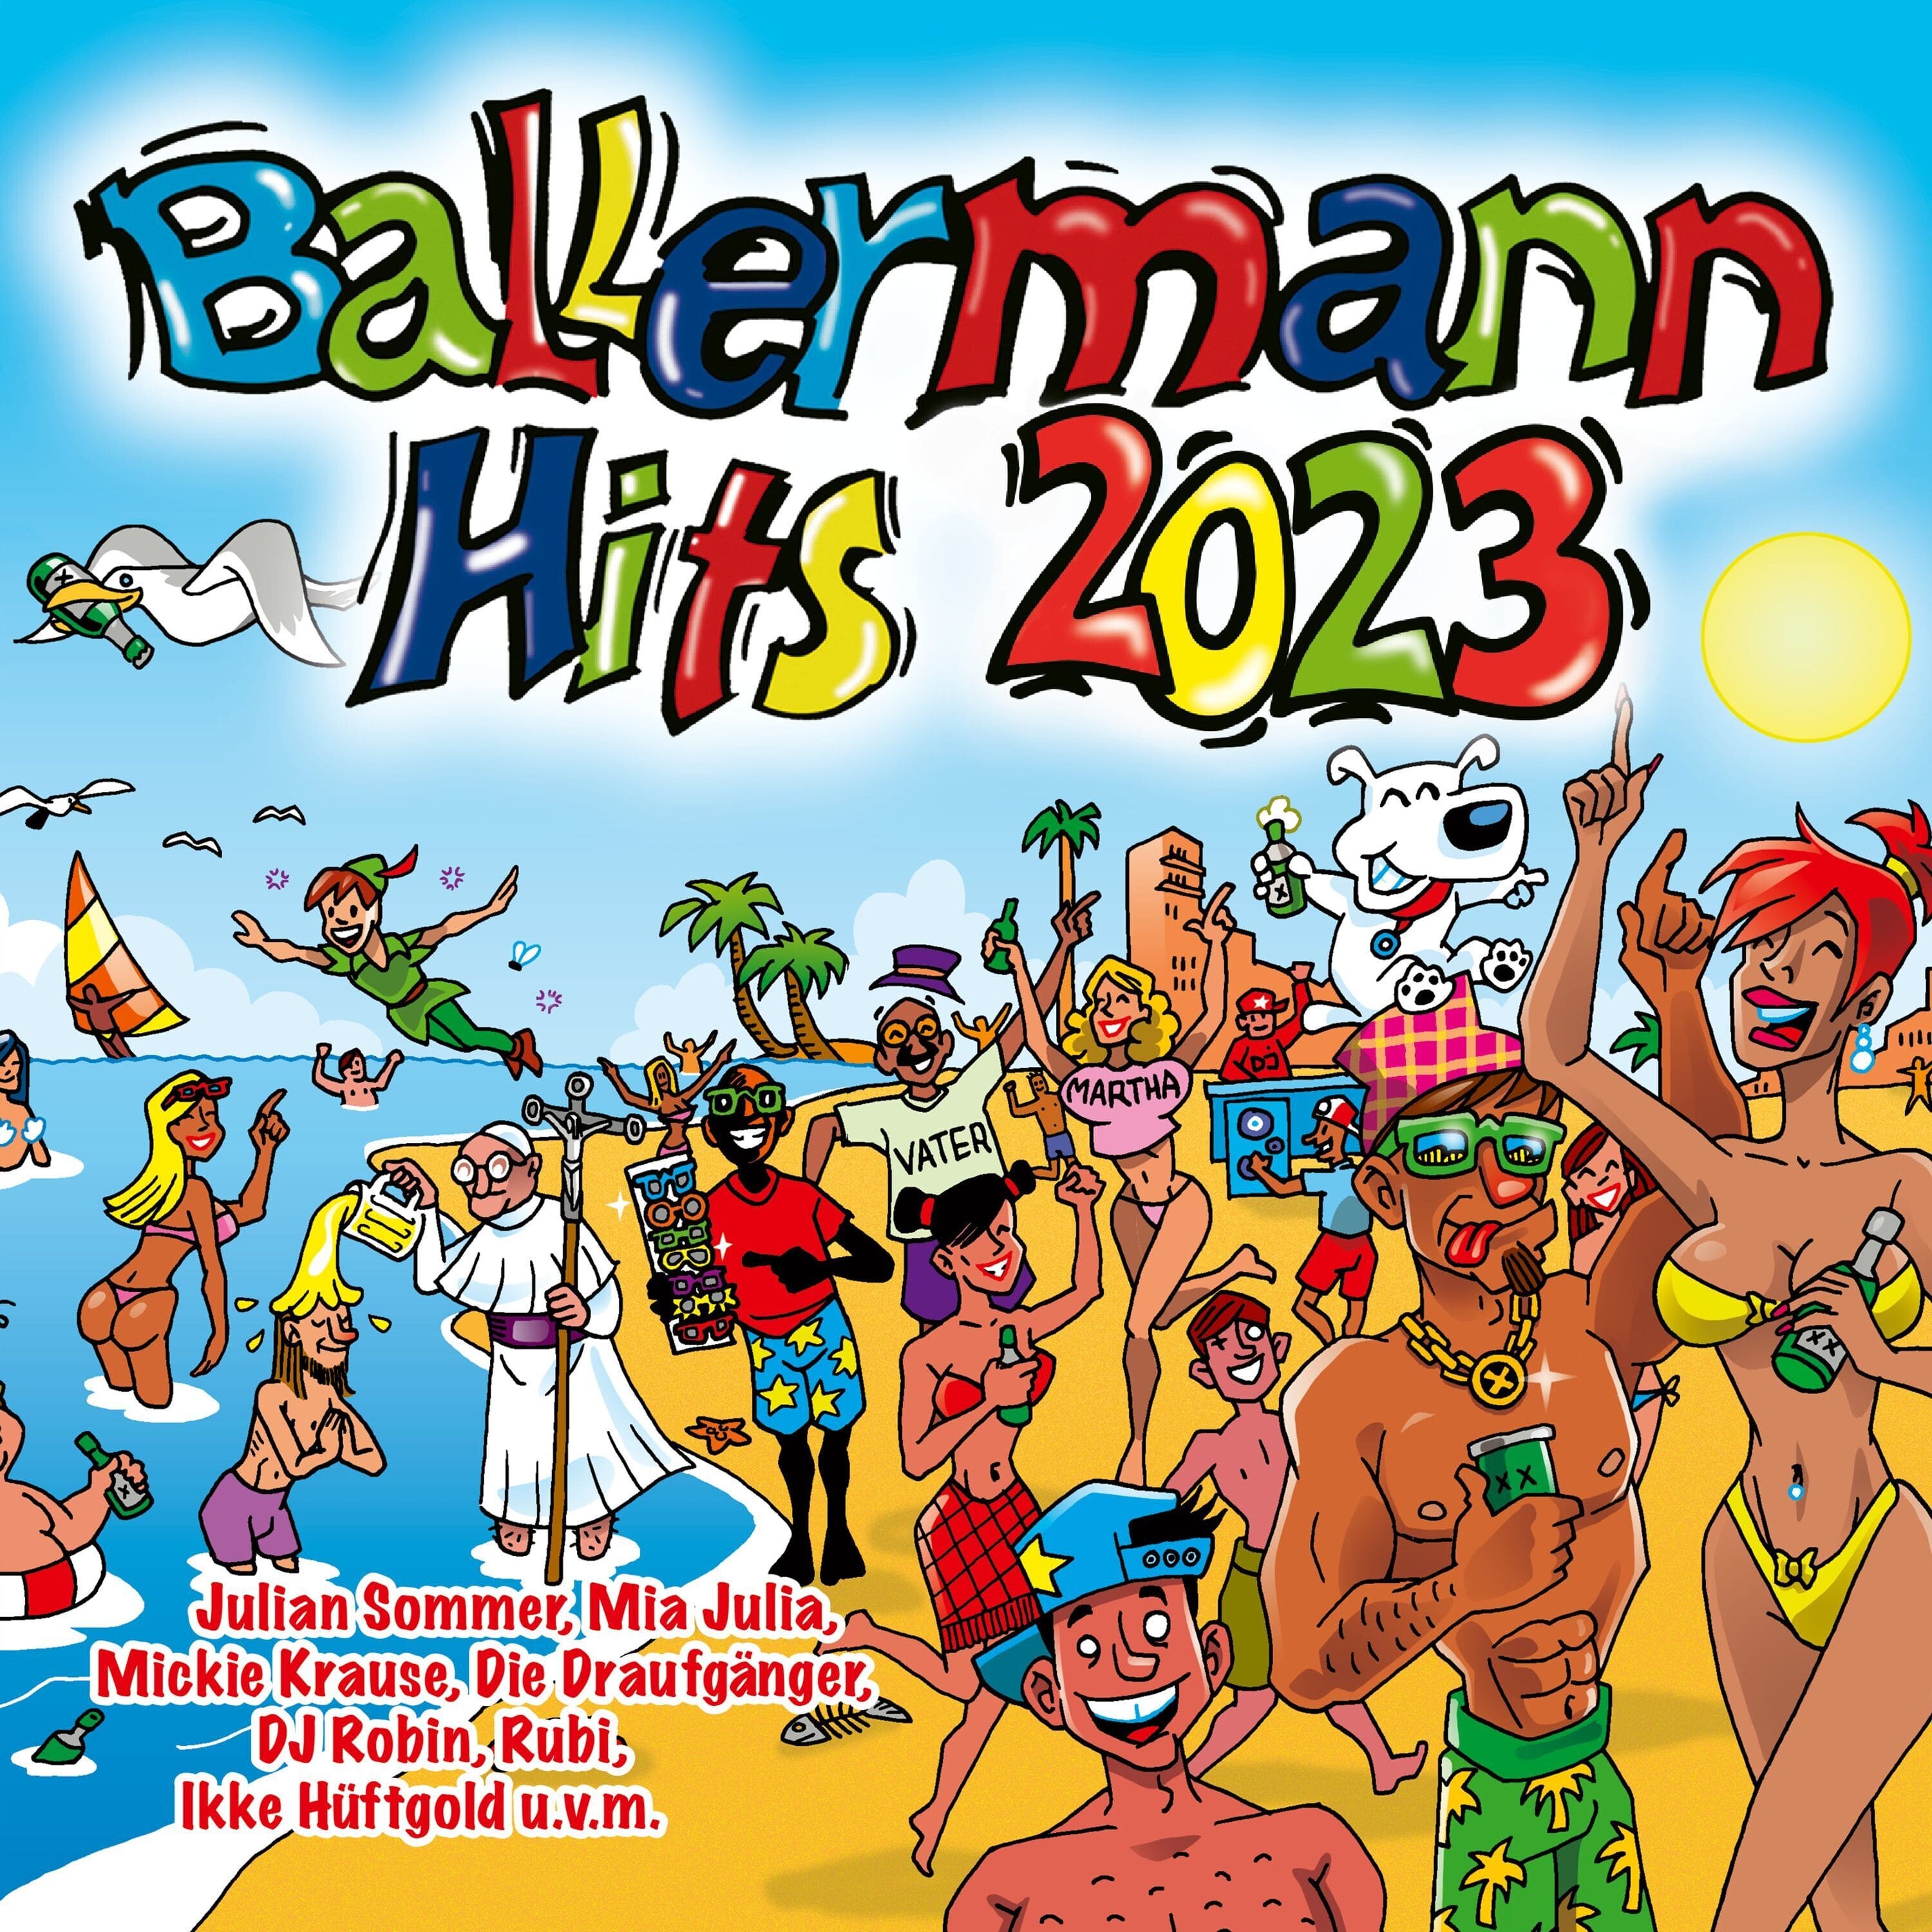 Bravado - Ballermann 2CD 2023 Various - Artists Hits 